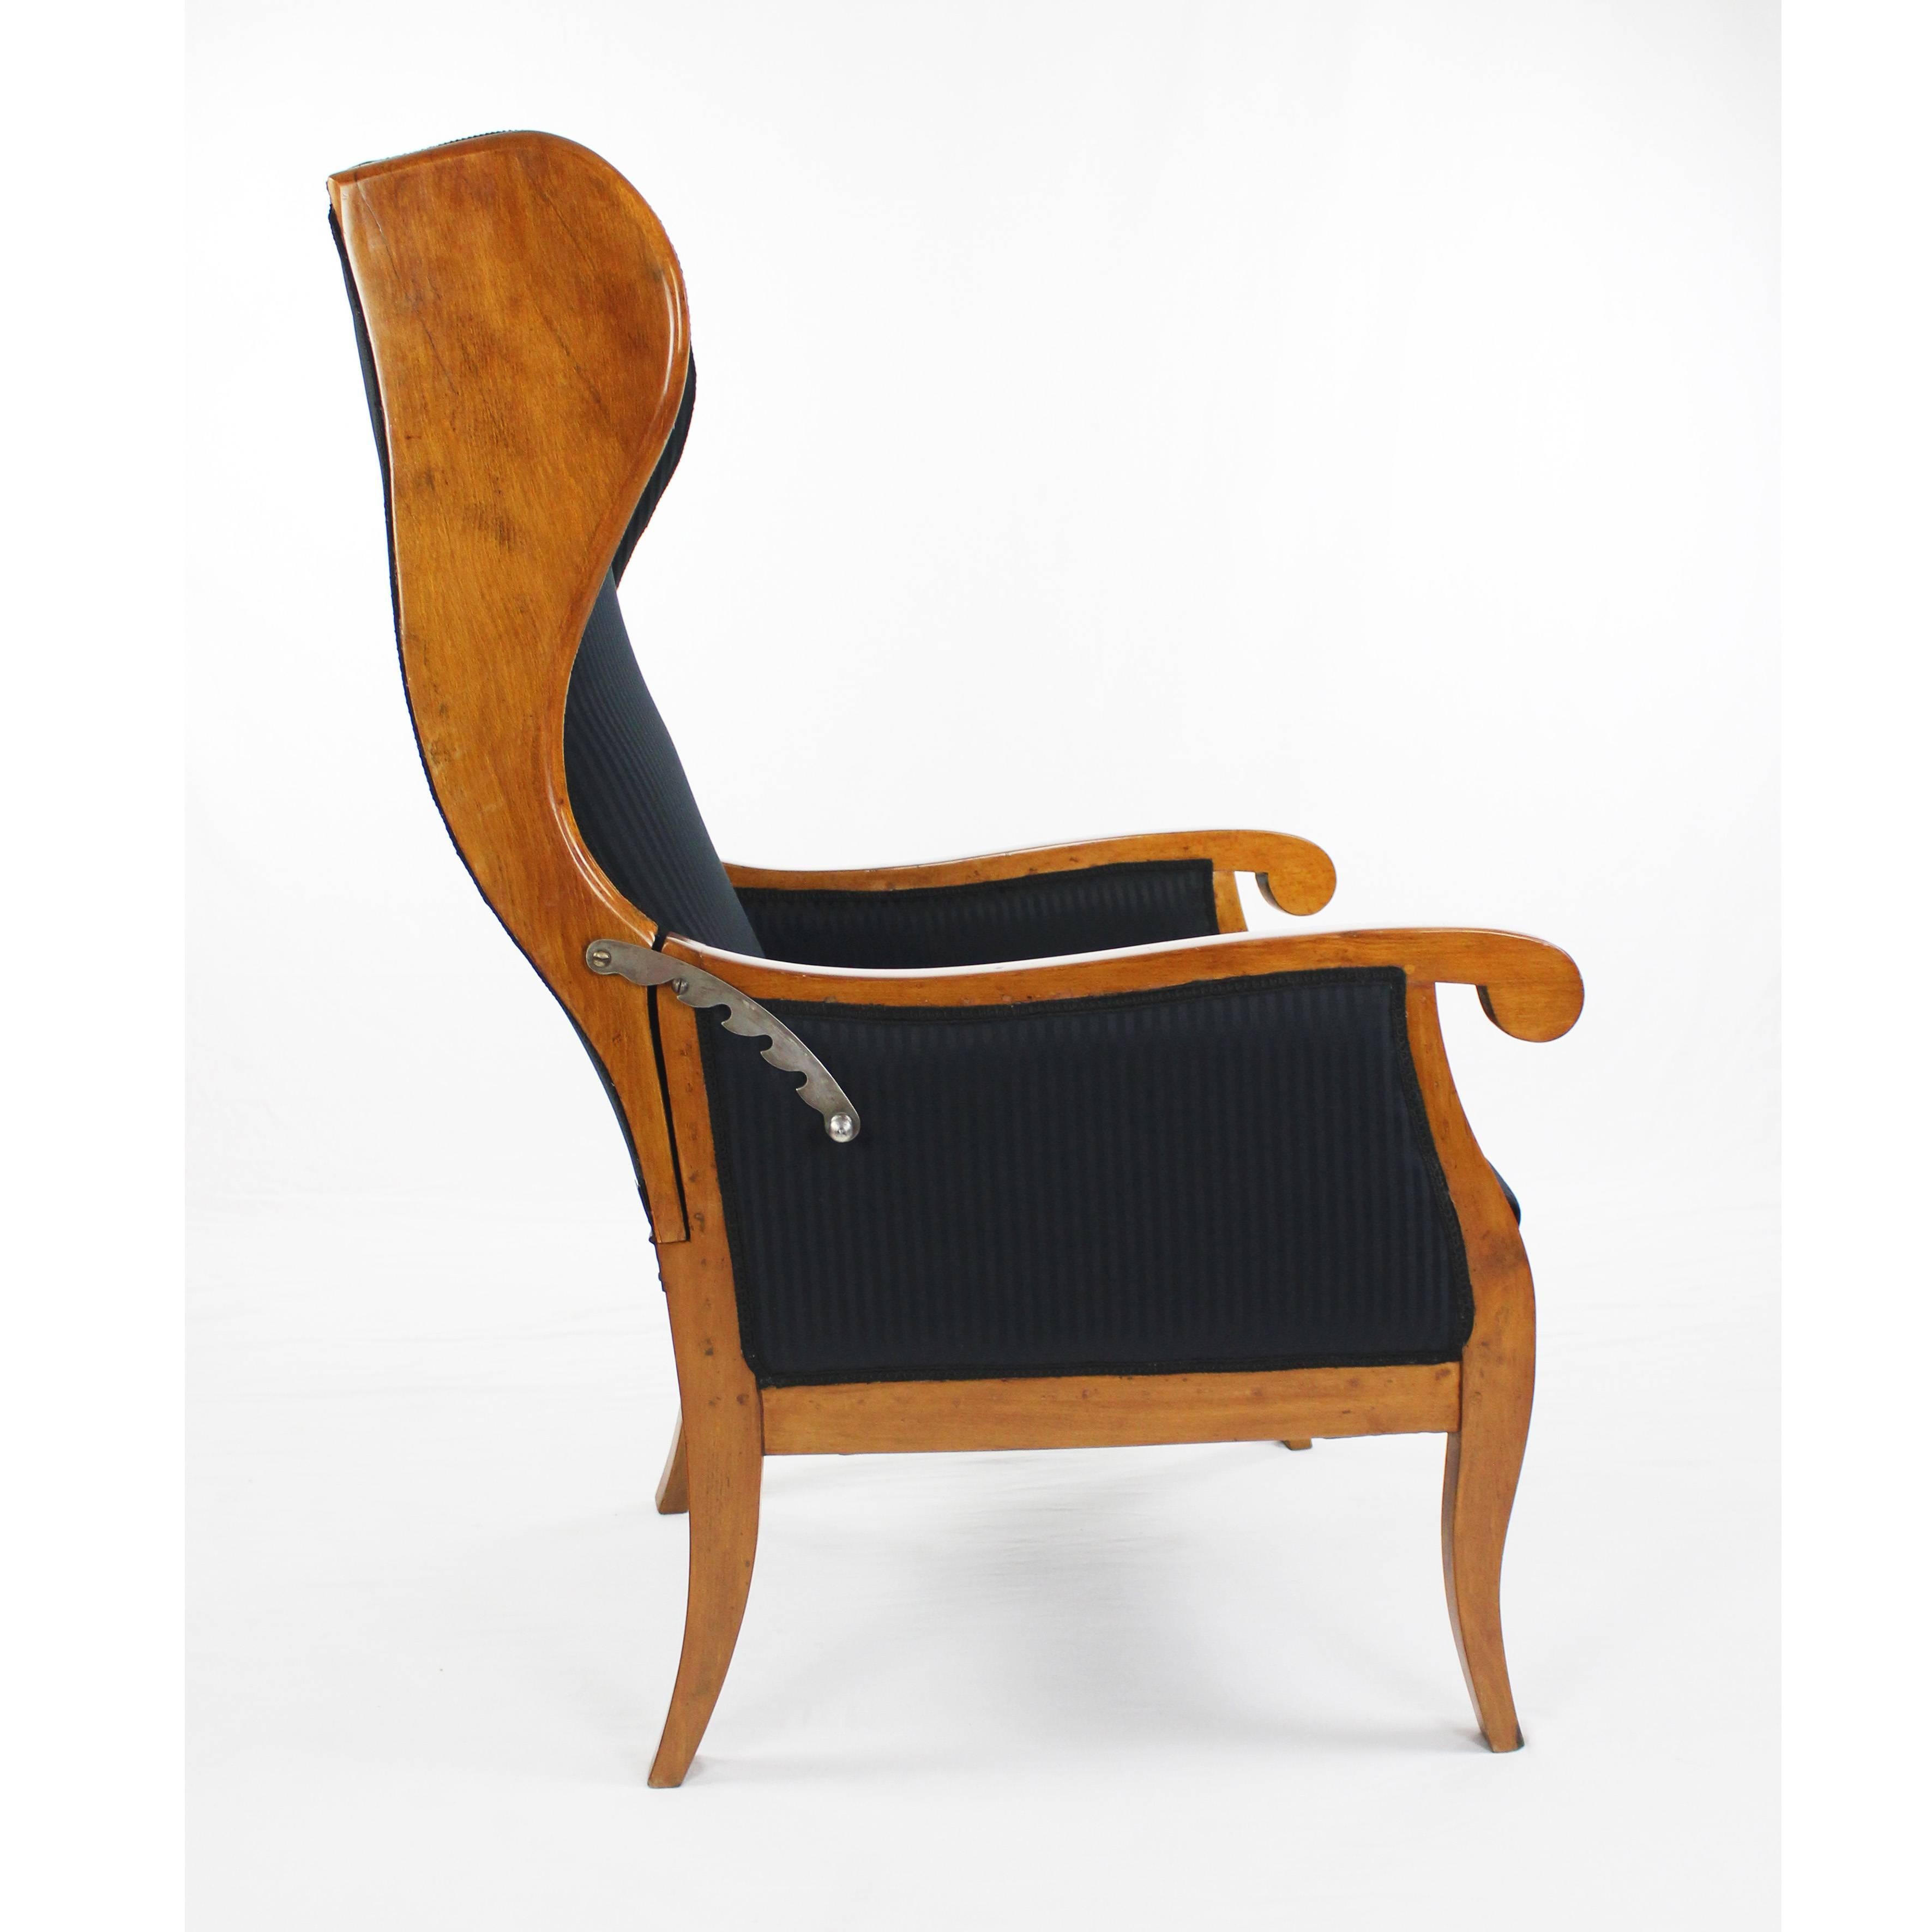 Early 19th Century Biedermeier Period Wingchair Armchair, Beech, circa 1820-1830